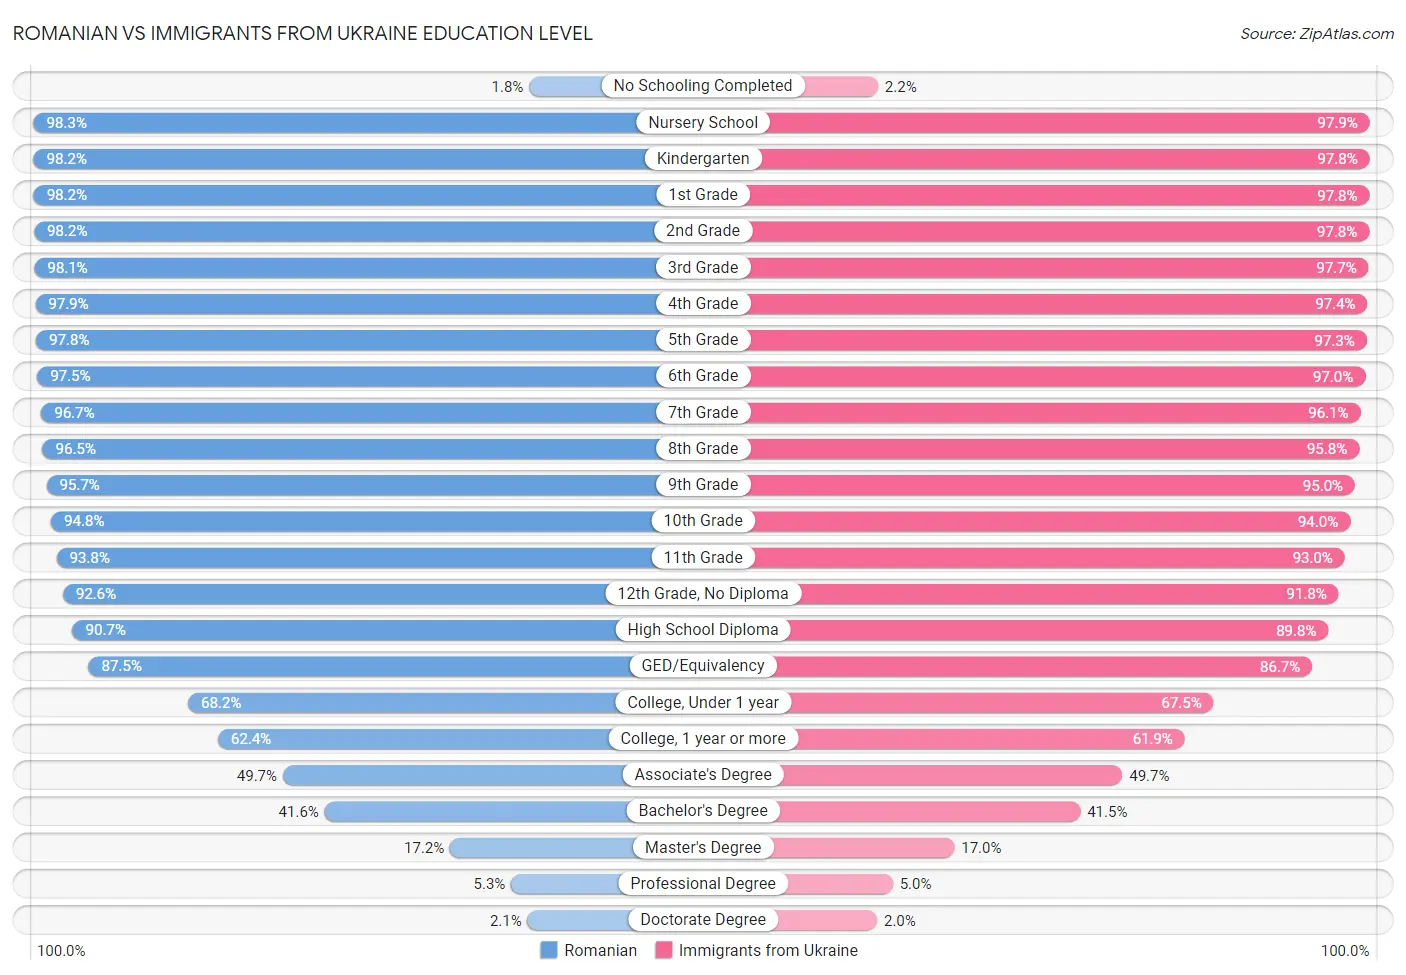 Romanian vs Immigrants from Ukraine Education Level